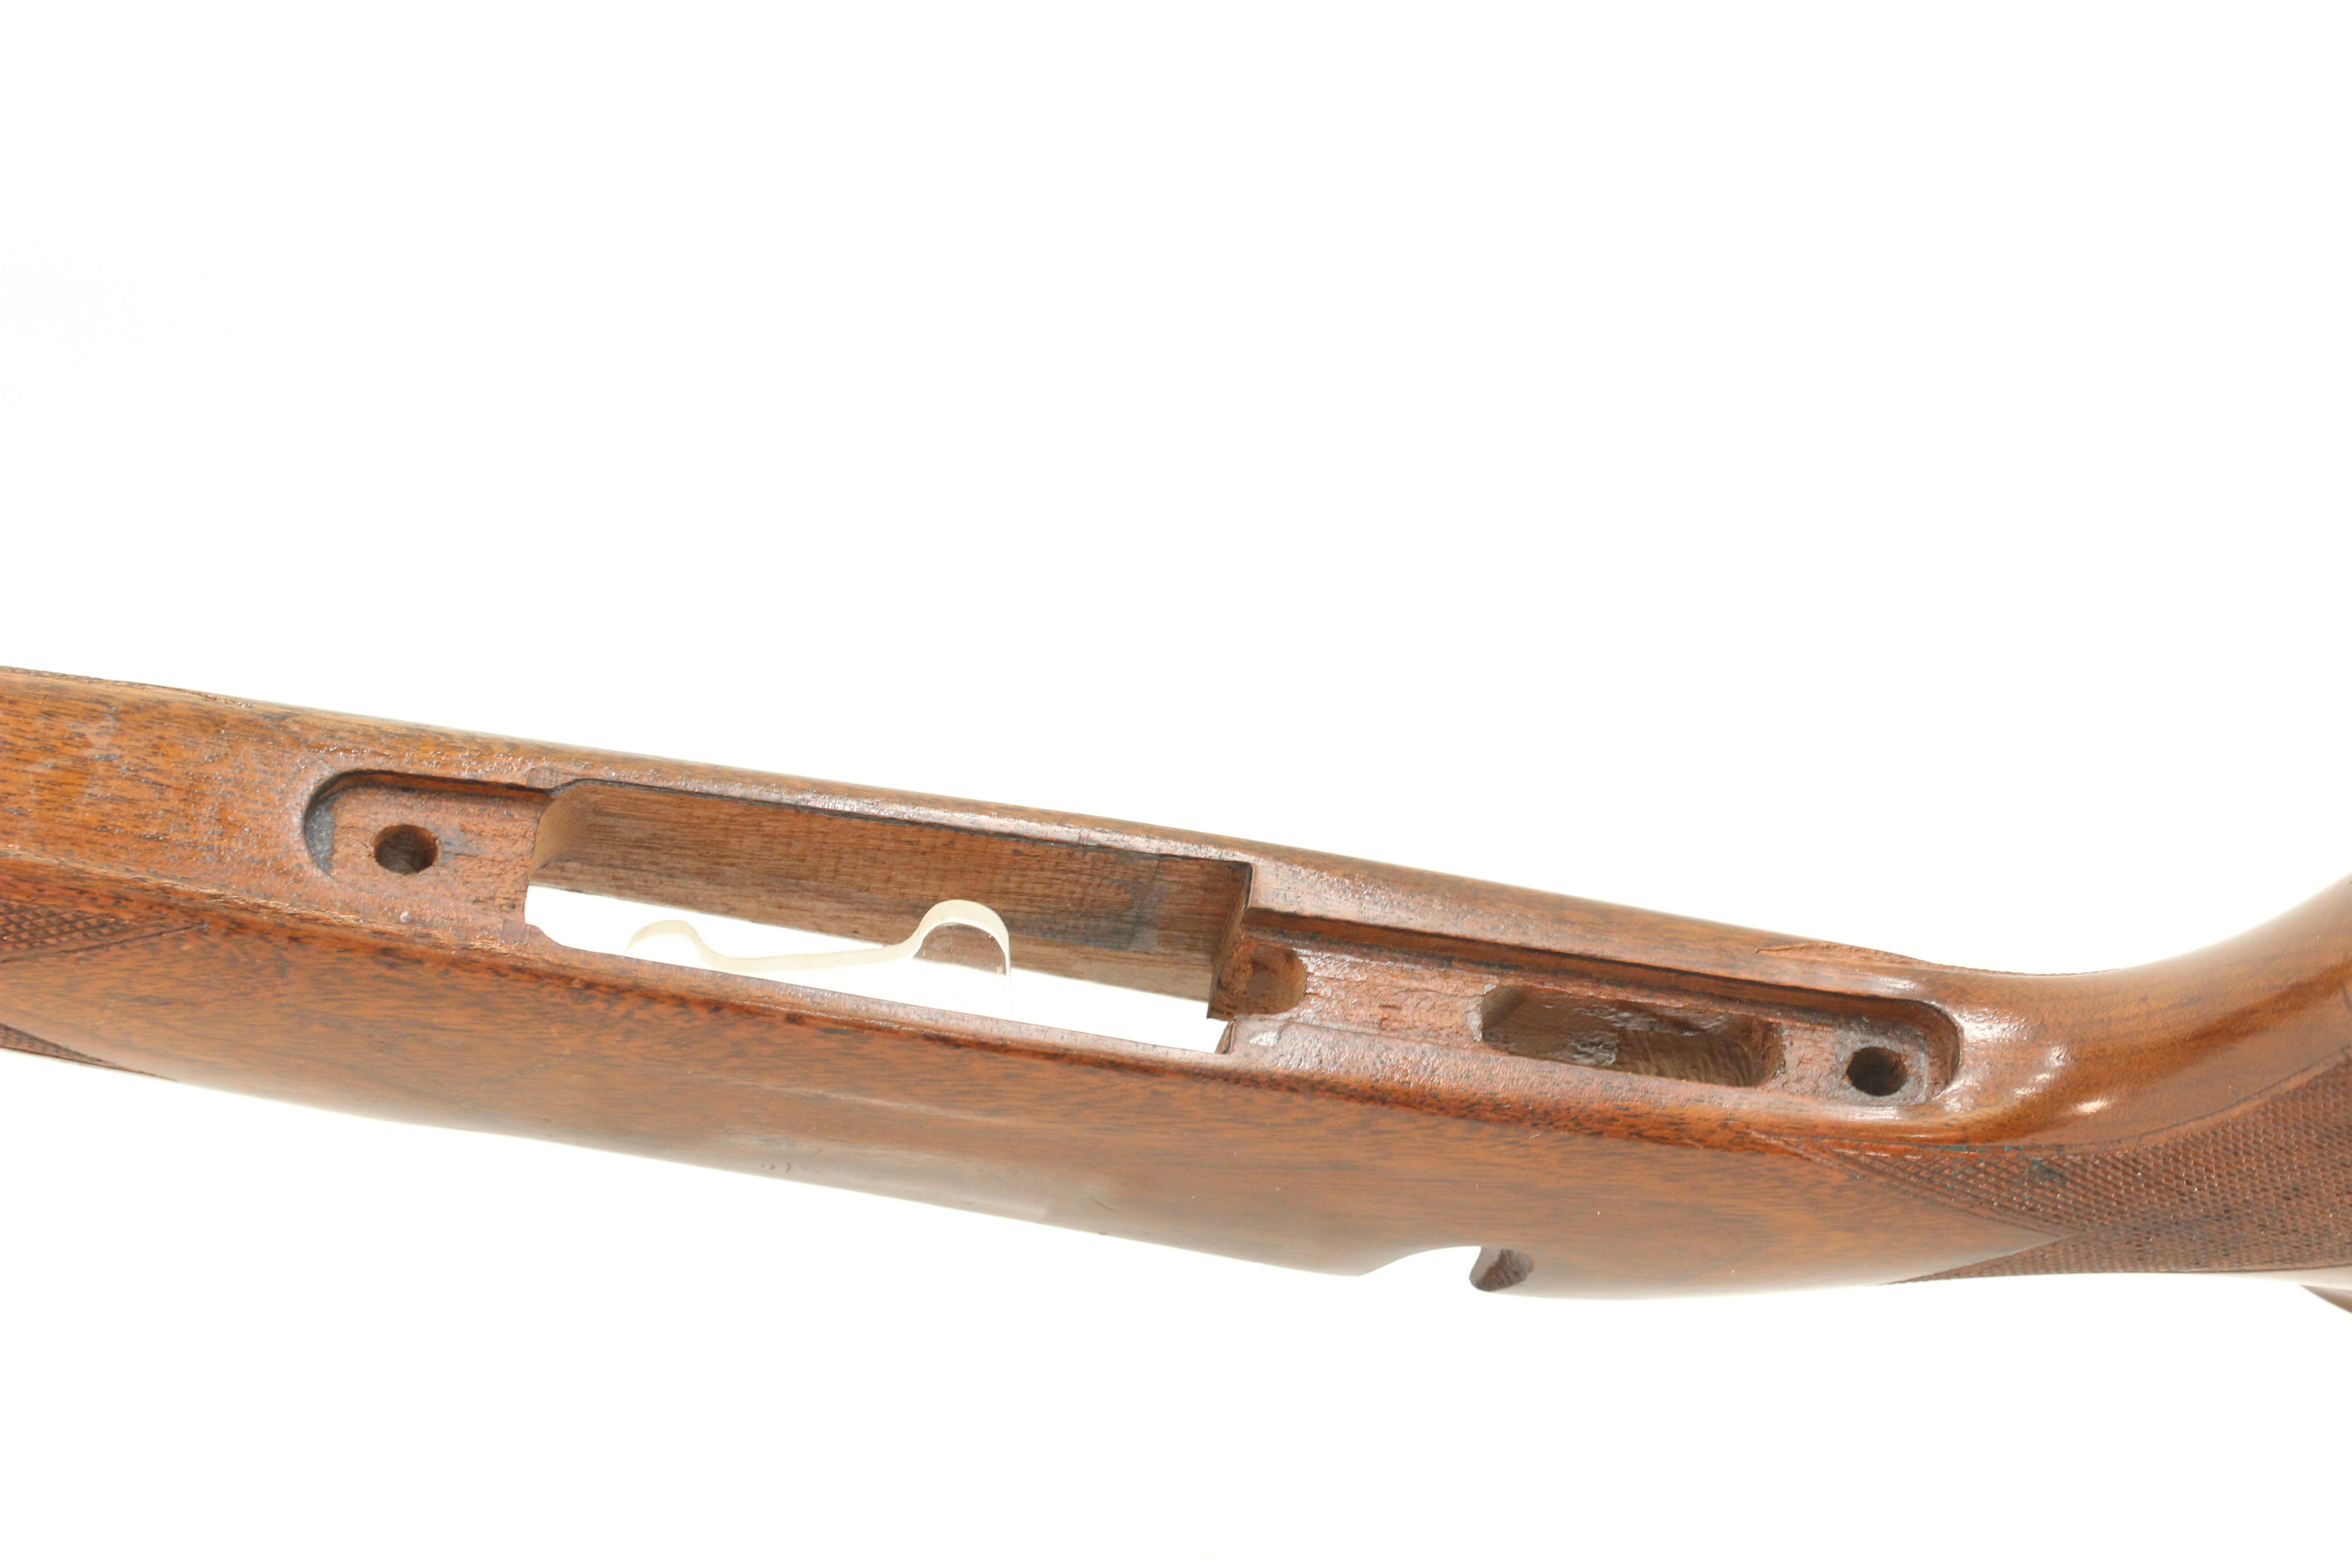 1952-1958 Monte Carlo Featherweight Rifle Stock